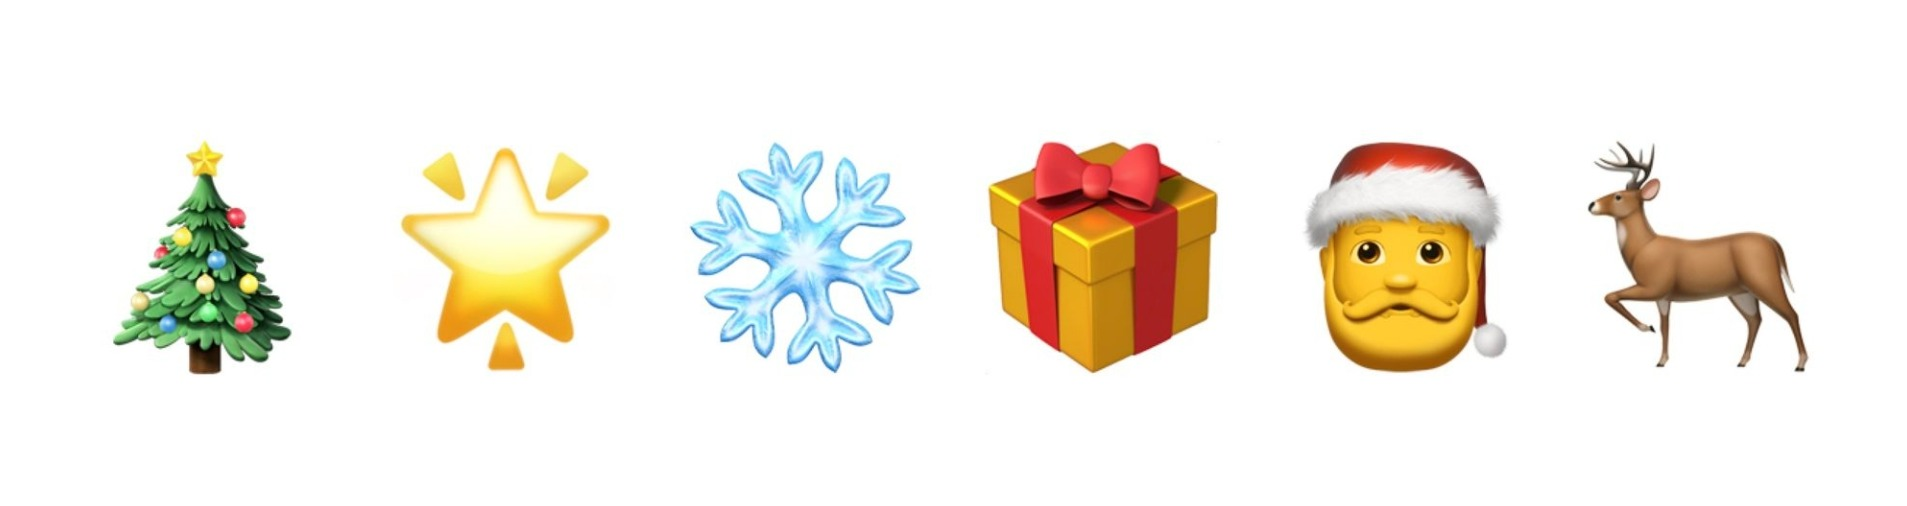 Most favorite emojis this holiday season